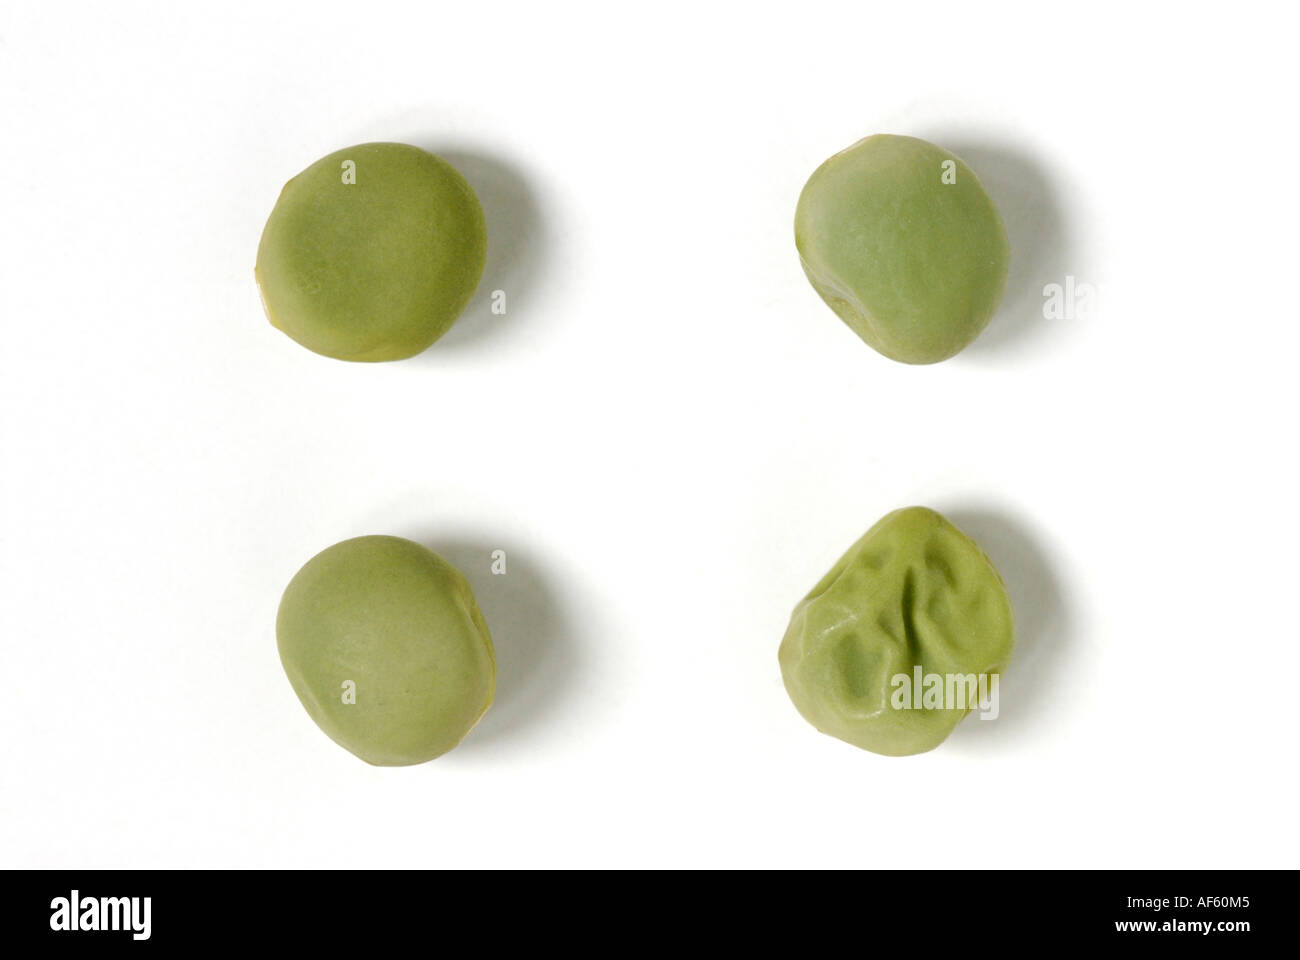 Grün glatt und faltige Erbsen Samen im Verhältnis 3 zu 1 Mendel Experimente Vererbung Genetik Punnett Quadrat Stockfoto